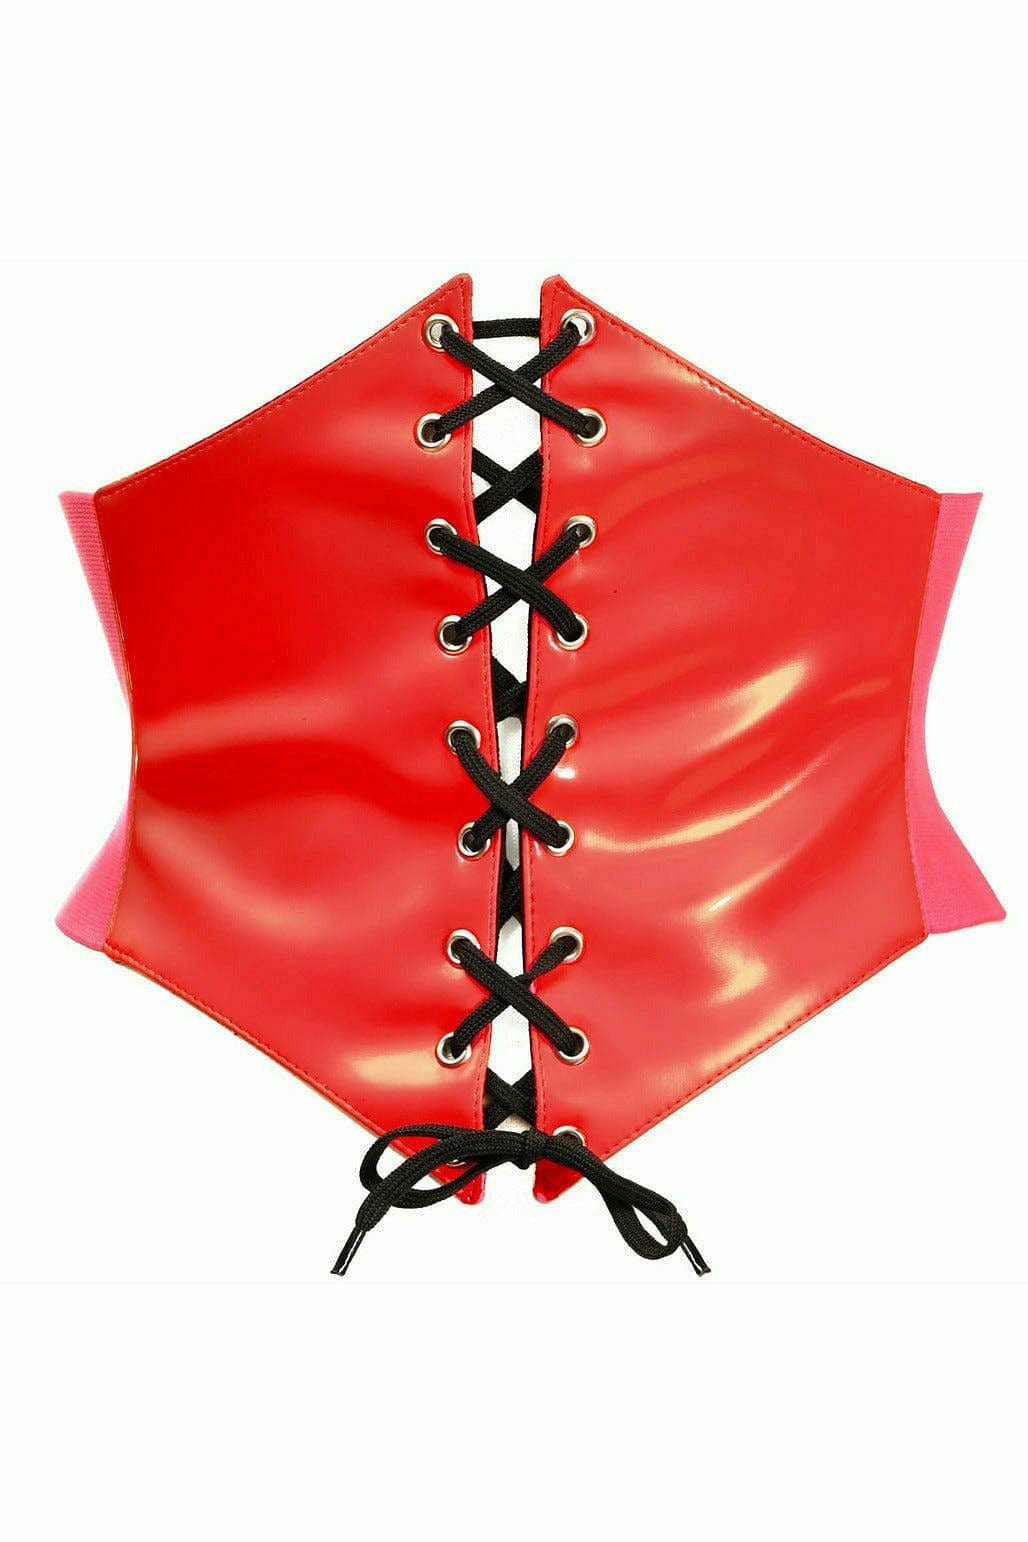 Sexy Red Patent Corset Belt Cincher Musotica.com